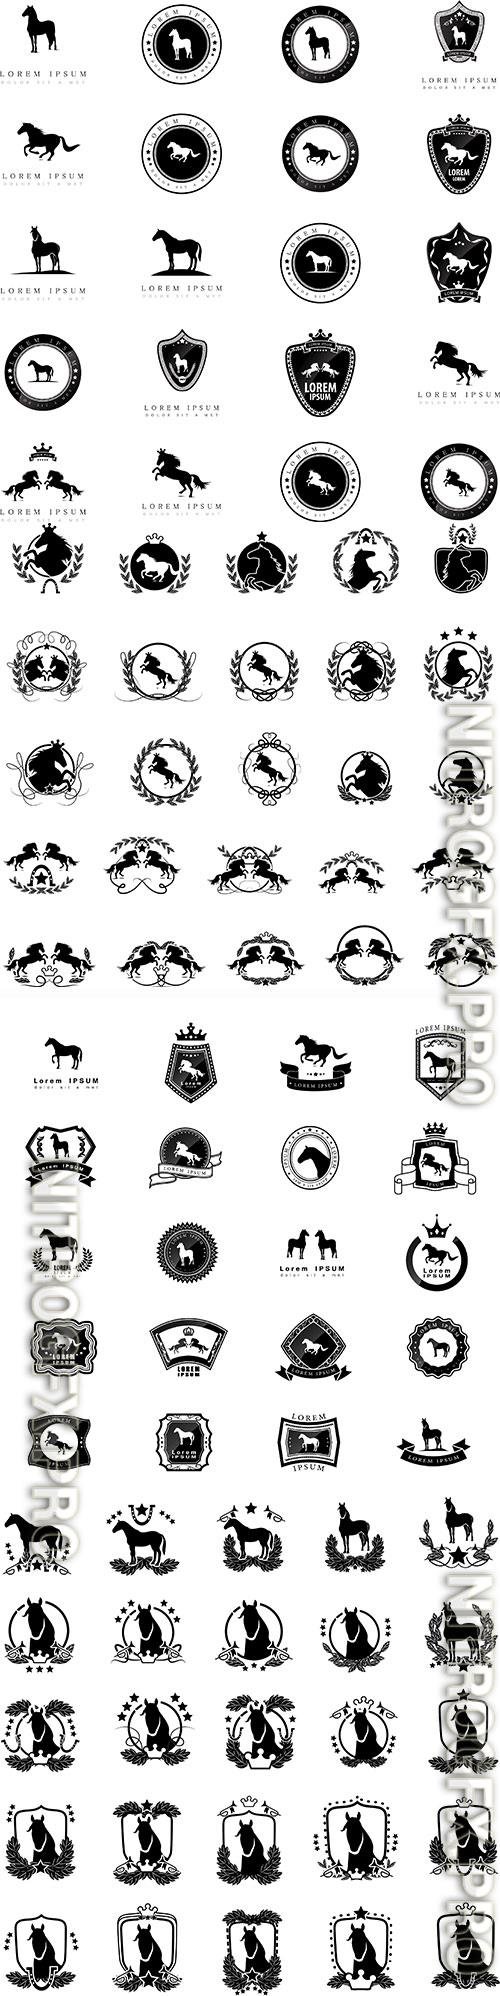 Horses - logos and emblems